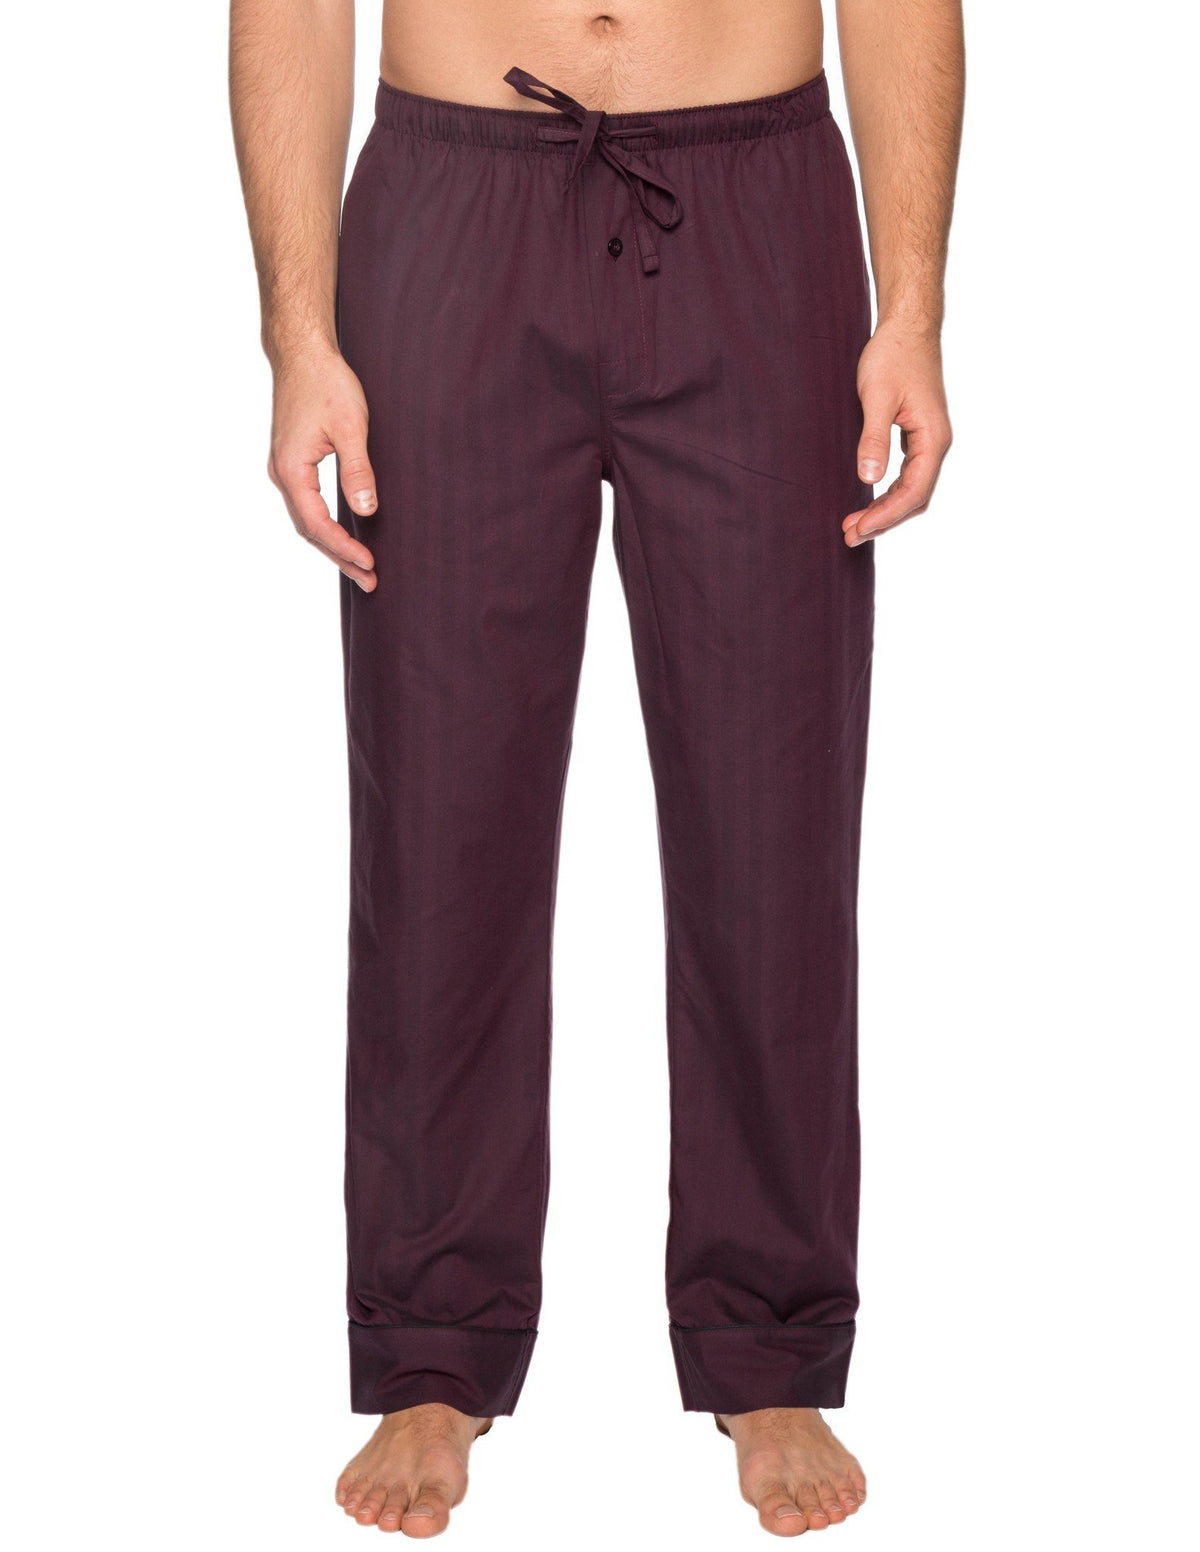 Men's 100% Cotton Comfort-Fit Sleep/Lounge Pants - Herringbone Fig/Black